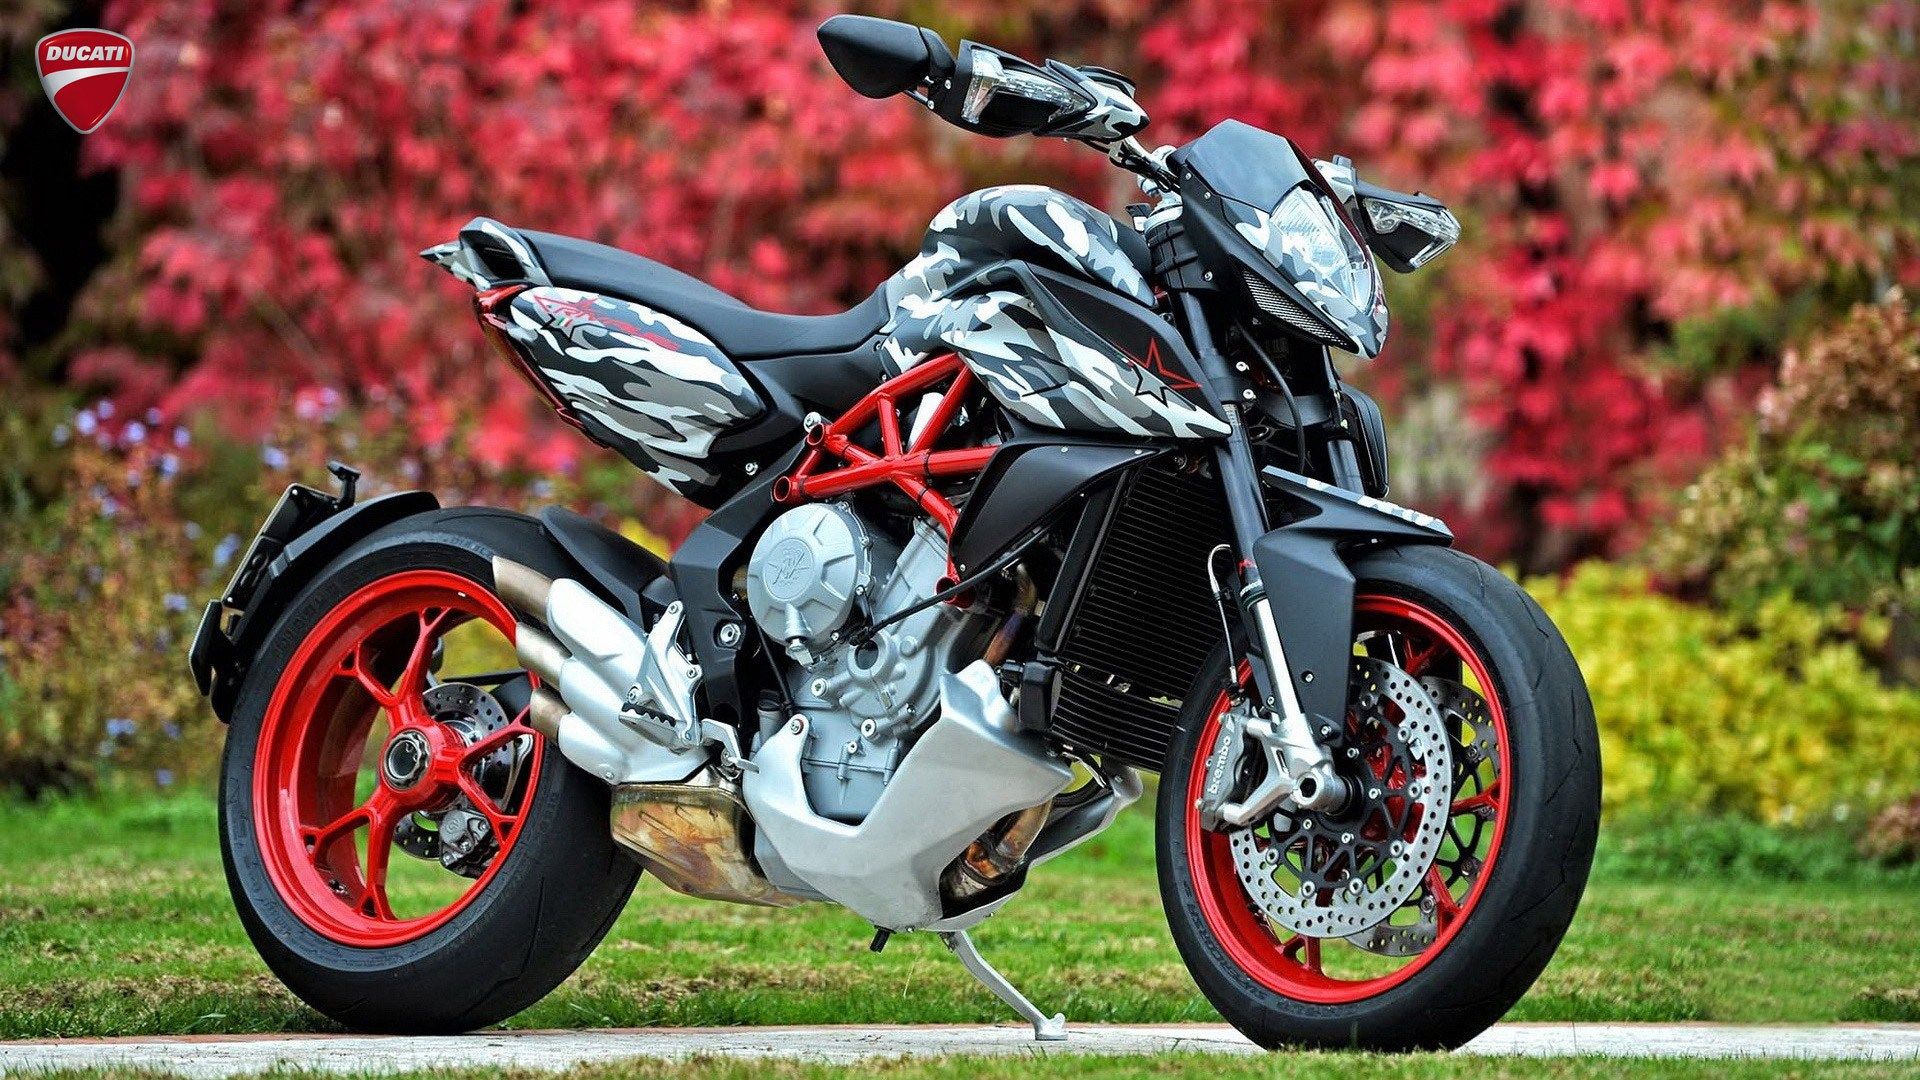 Best Of Ducati Bikes HD Image. High Definition Wallpaper